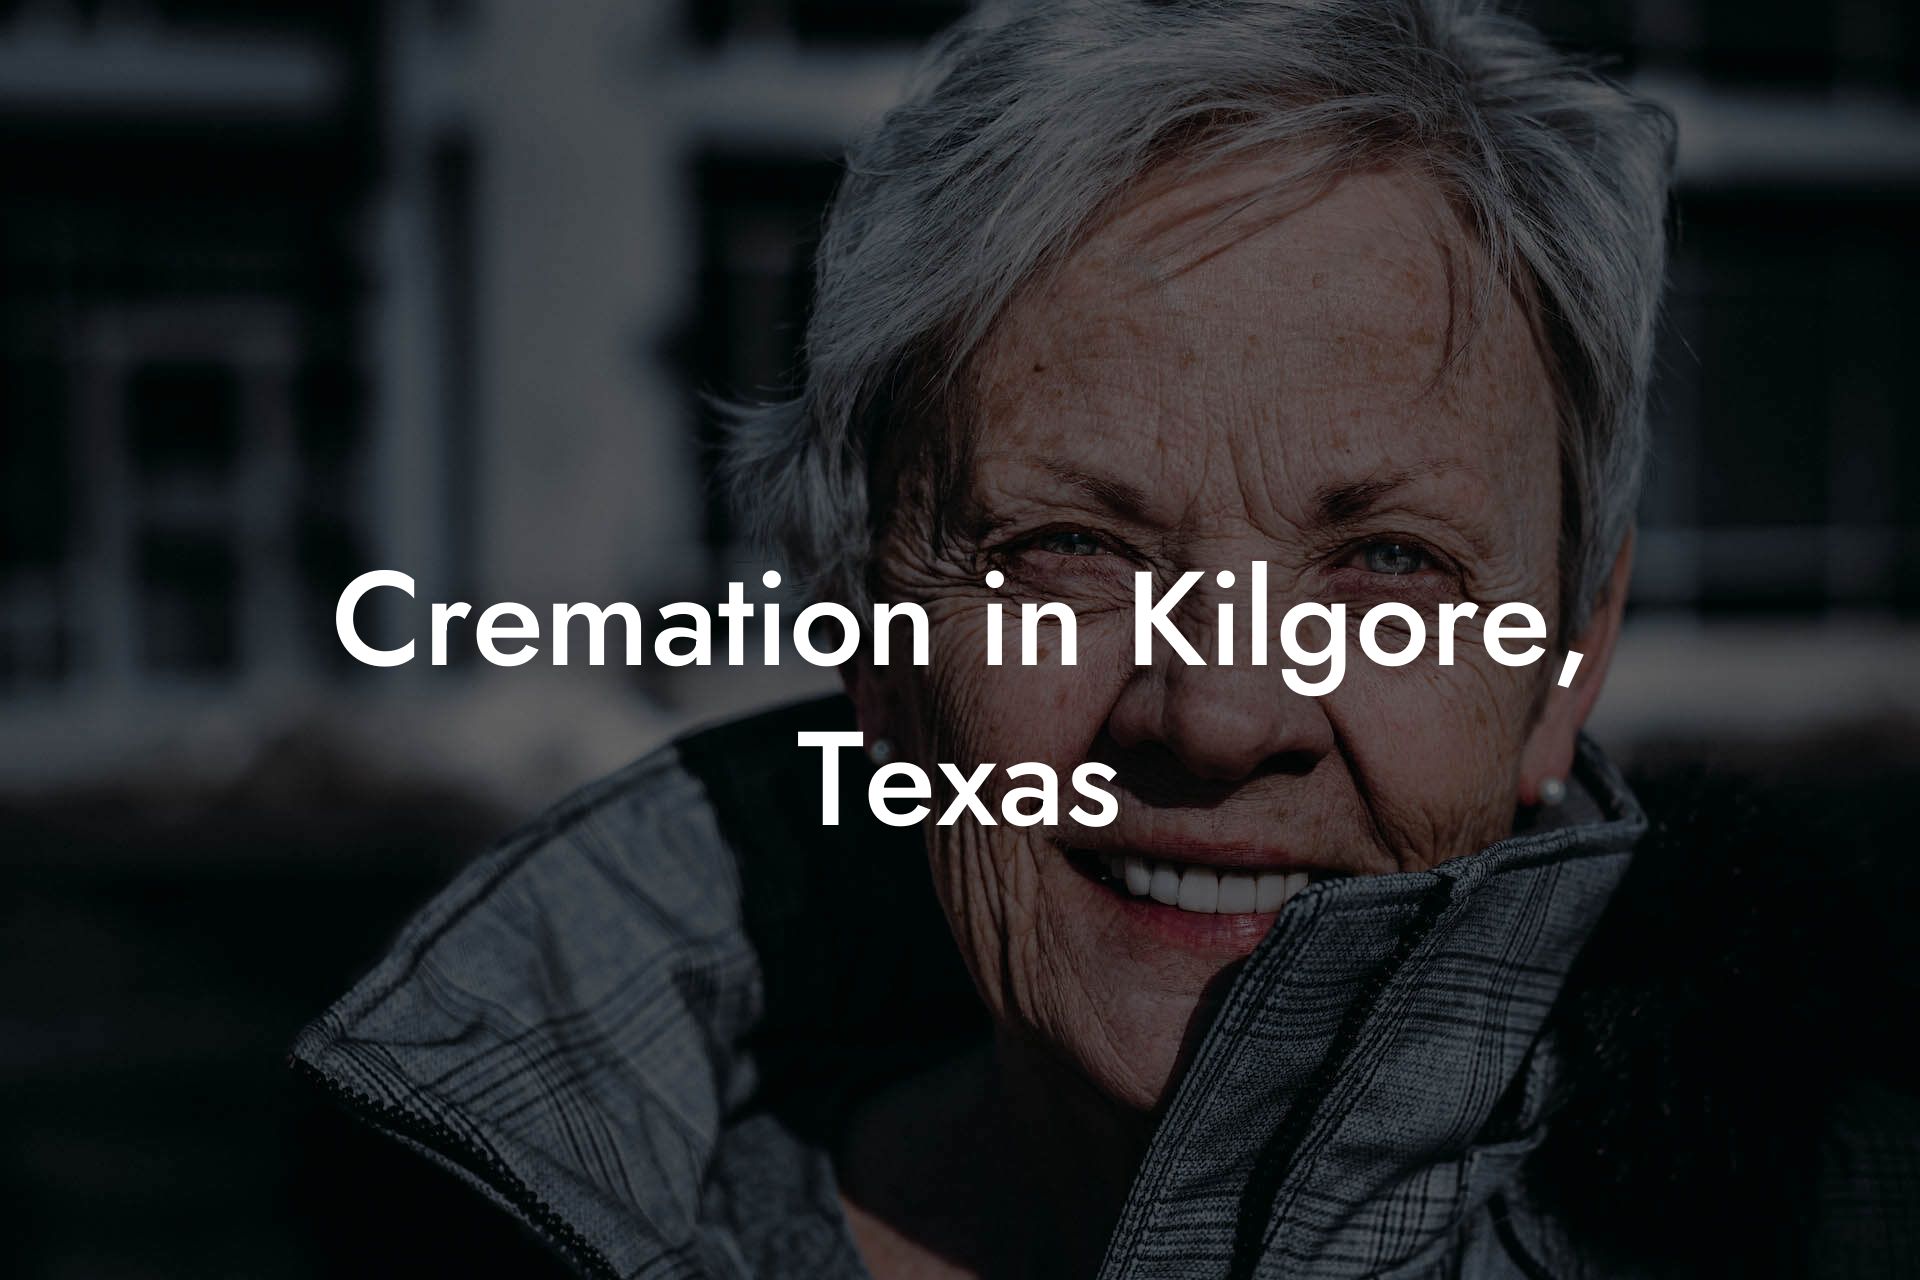 Cremation in Kilgore, Texas